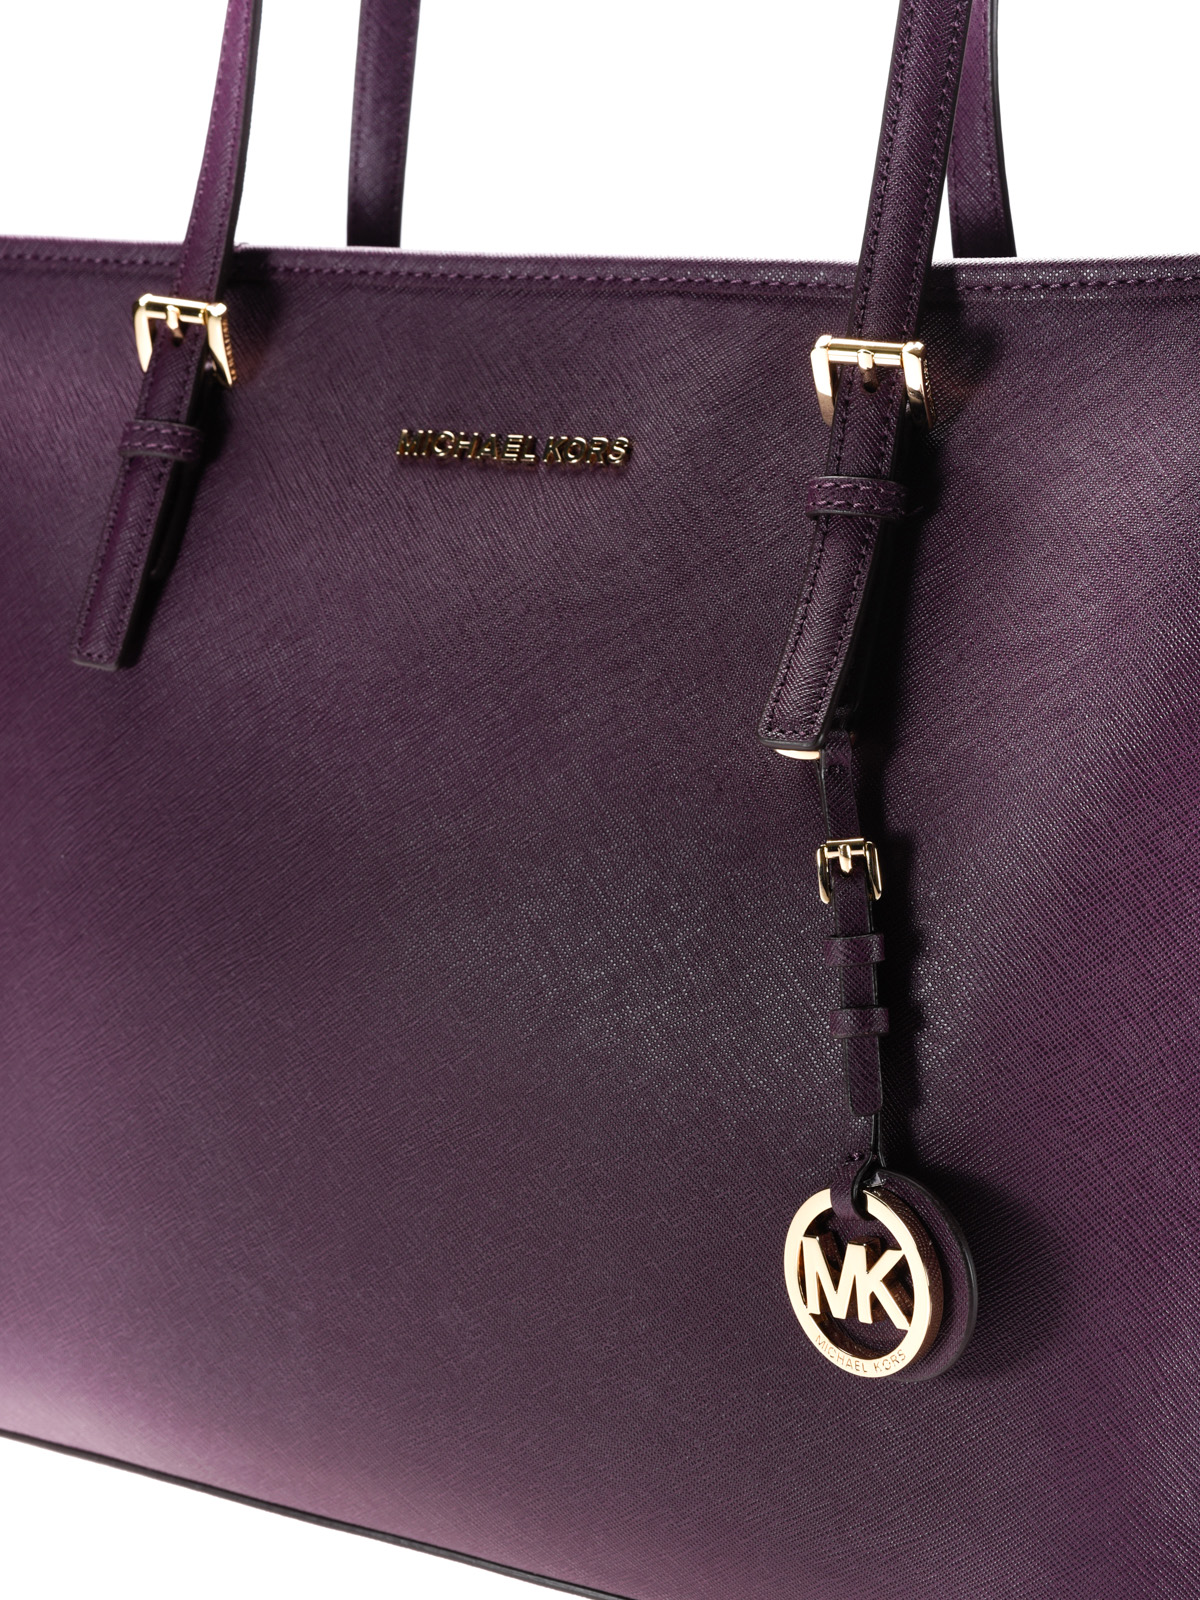 michael kors purple handbag